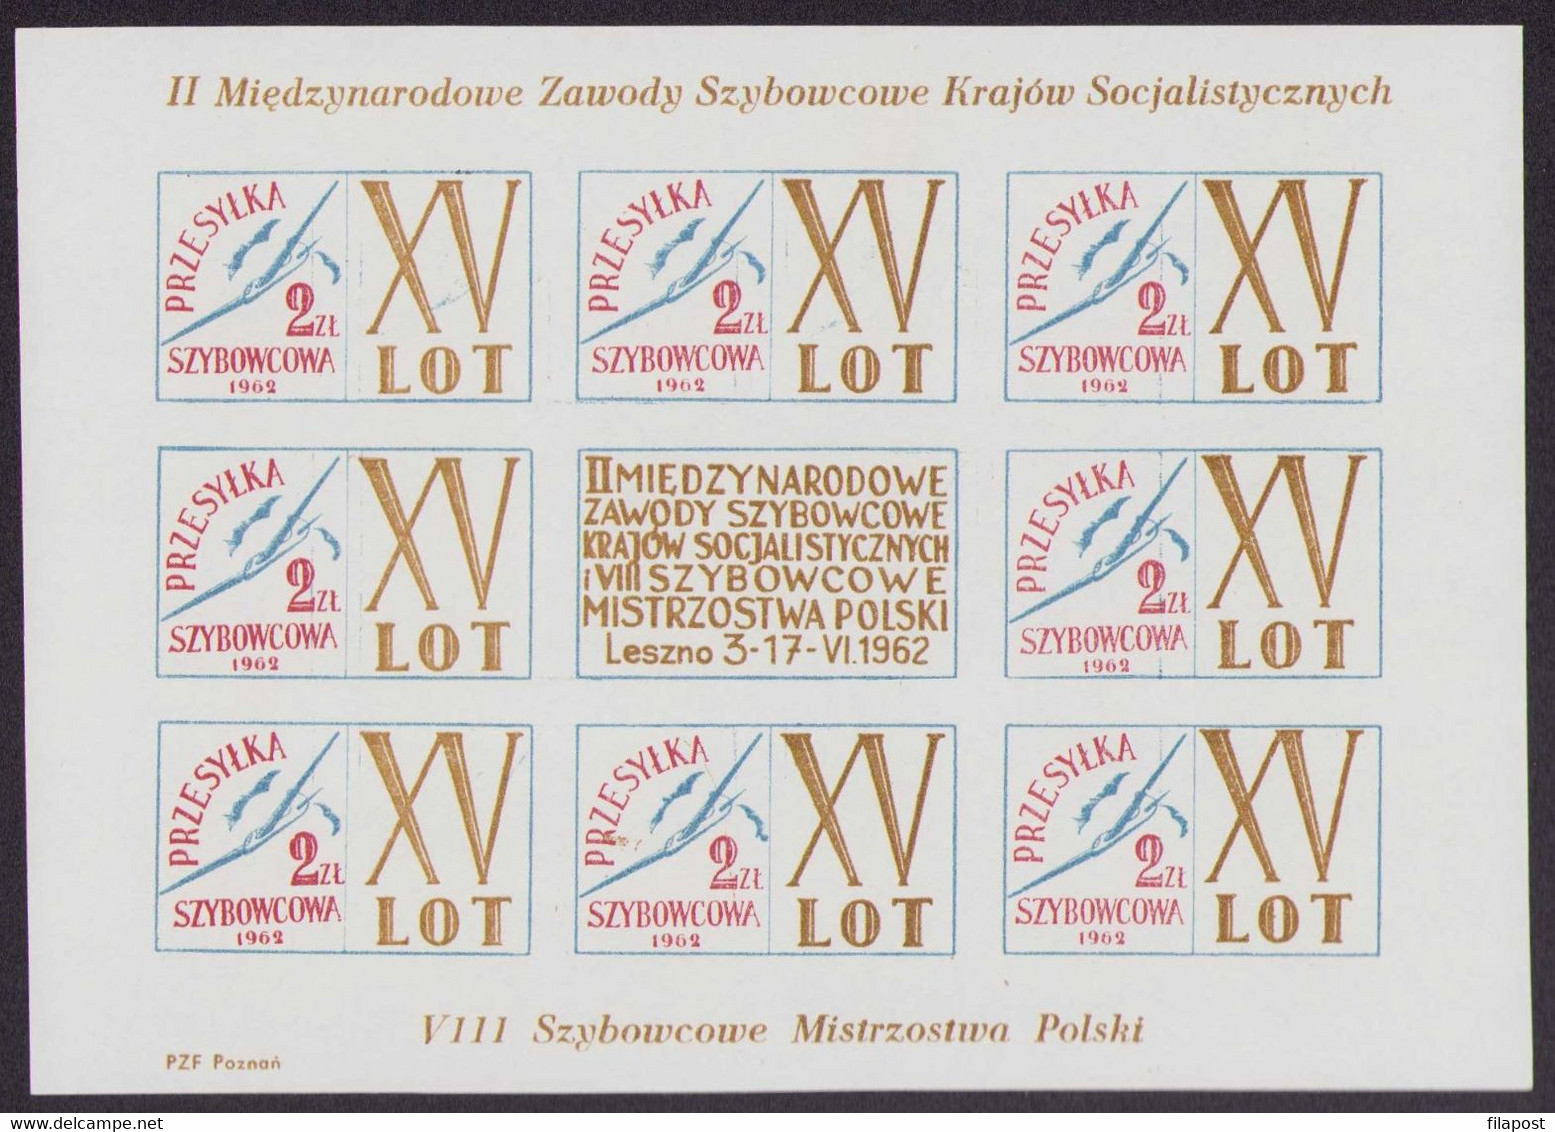 POLAND 1962 Interational & Polish Gliding Championships / Socialist Countries, LOT, Airplane, Plane, Full Sheet MNH**P71 - Full Sheets